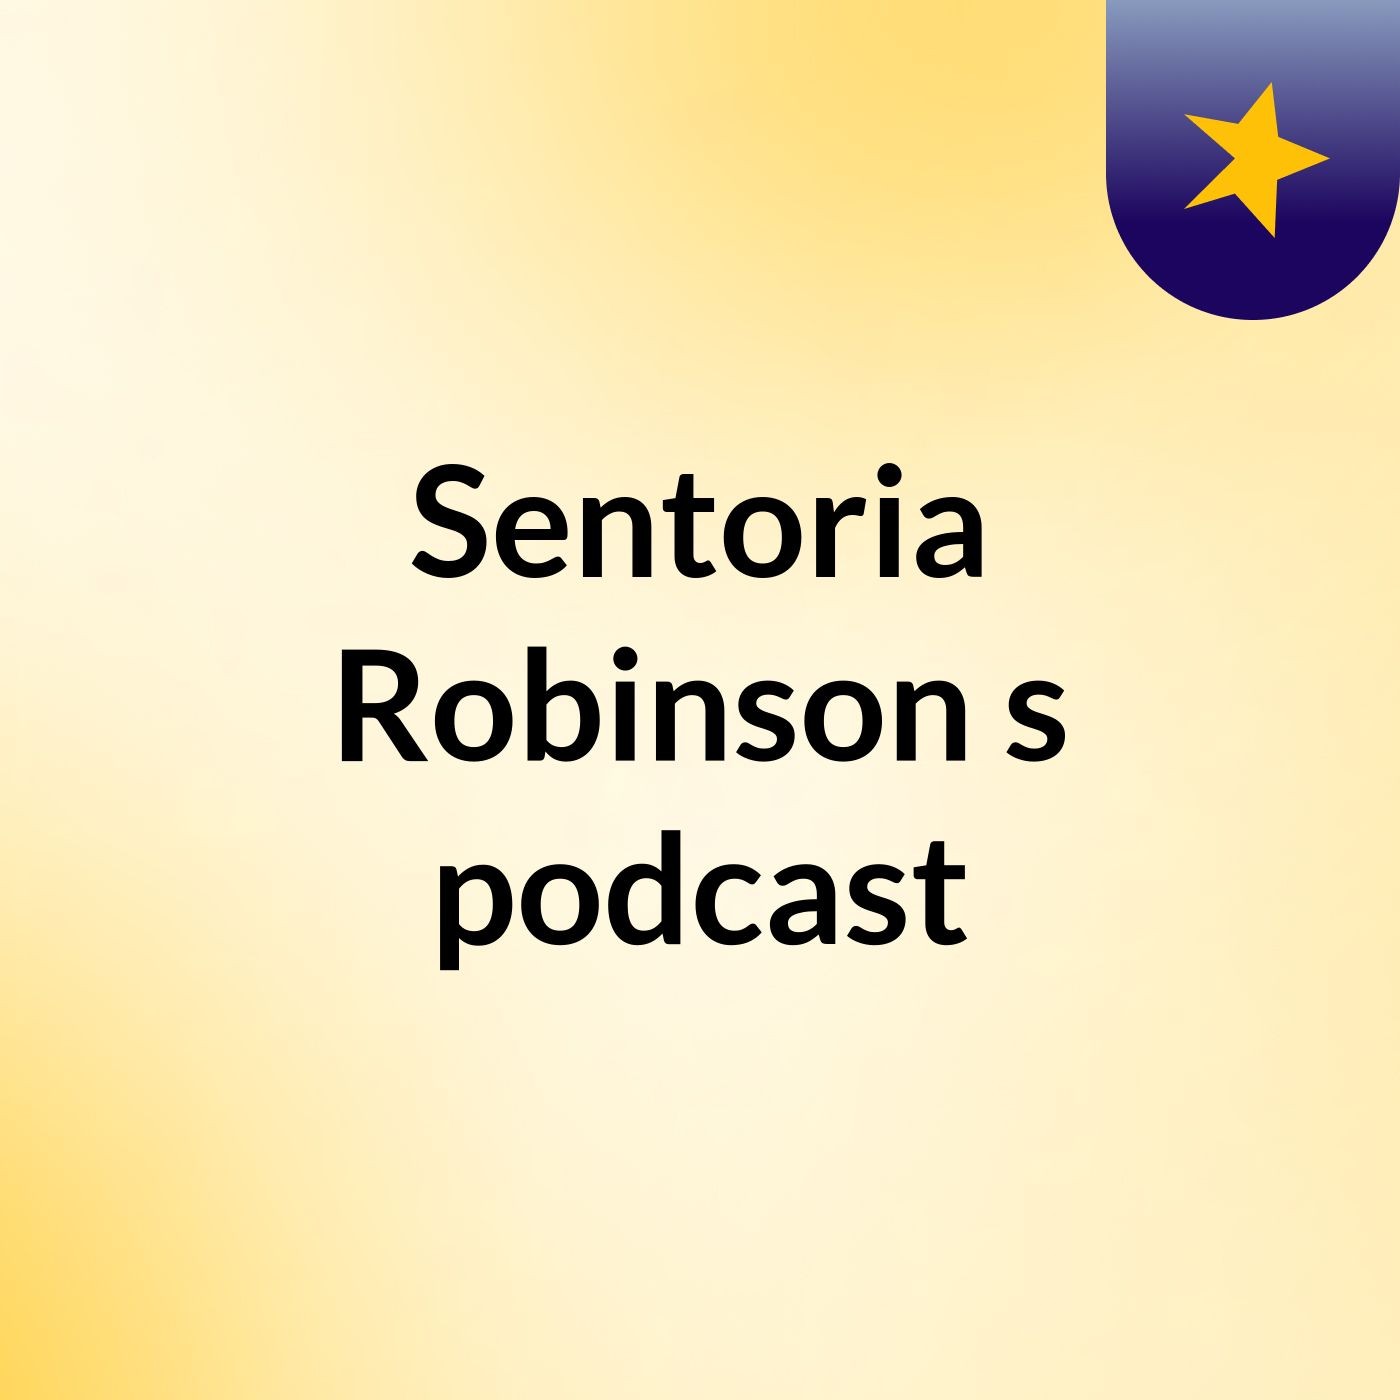 Episode 1 - Sentoria Robinson's podcast